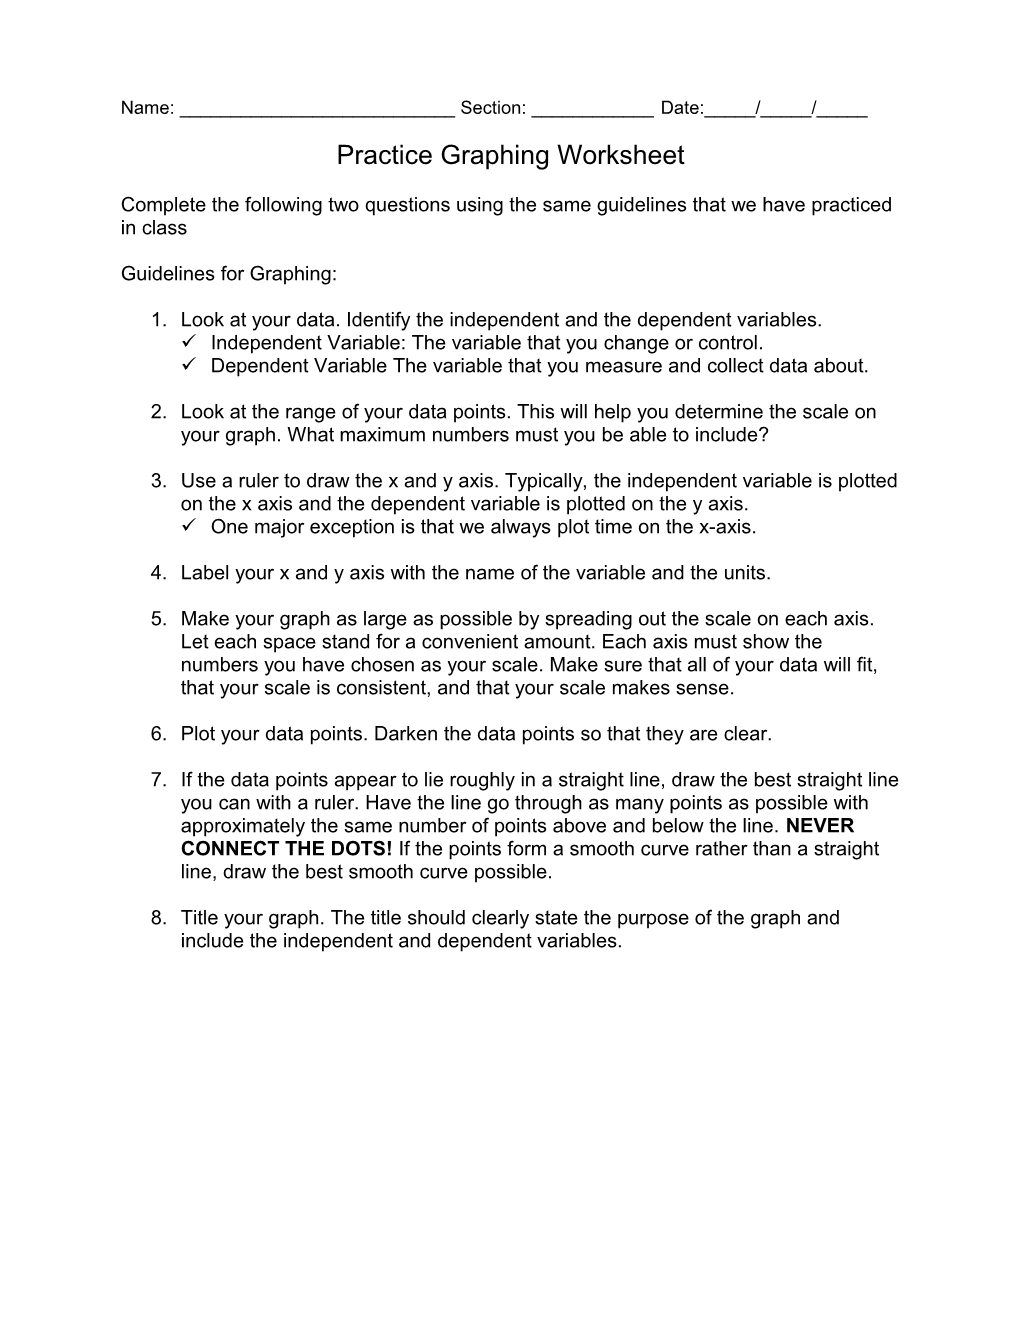 Practice Graphing Worksheet